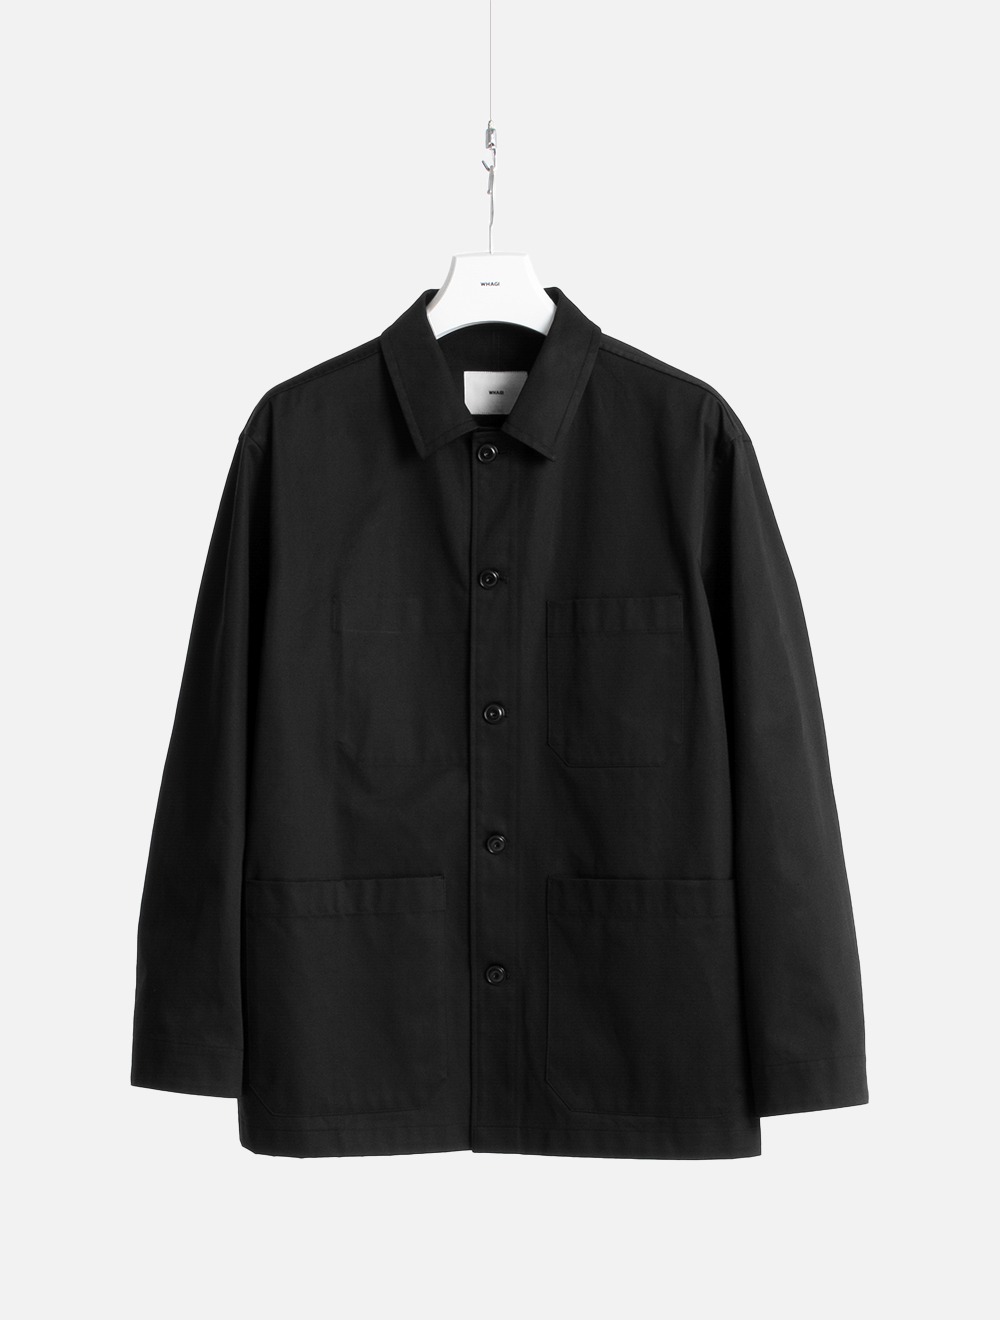 Work Jacket (Black)